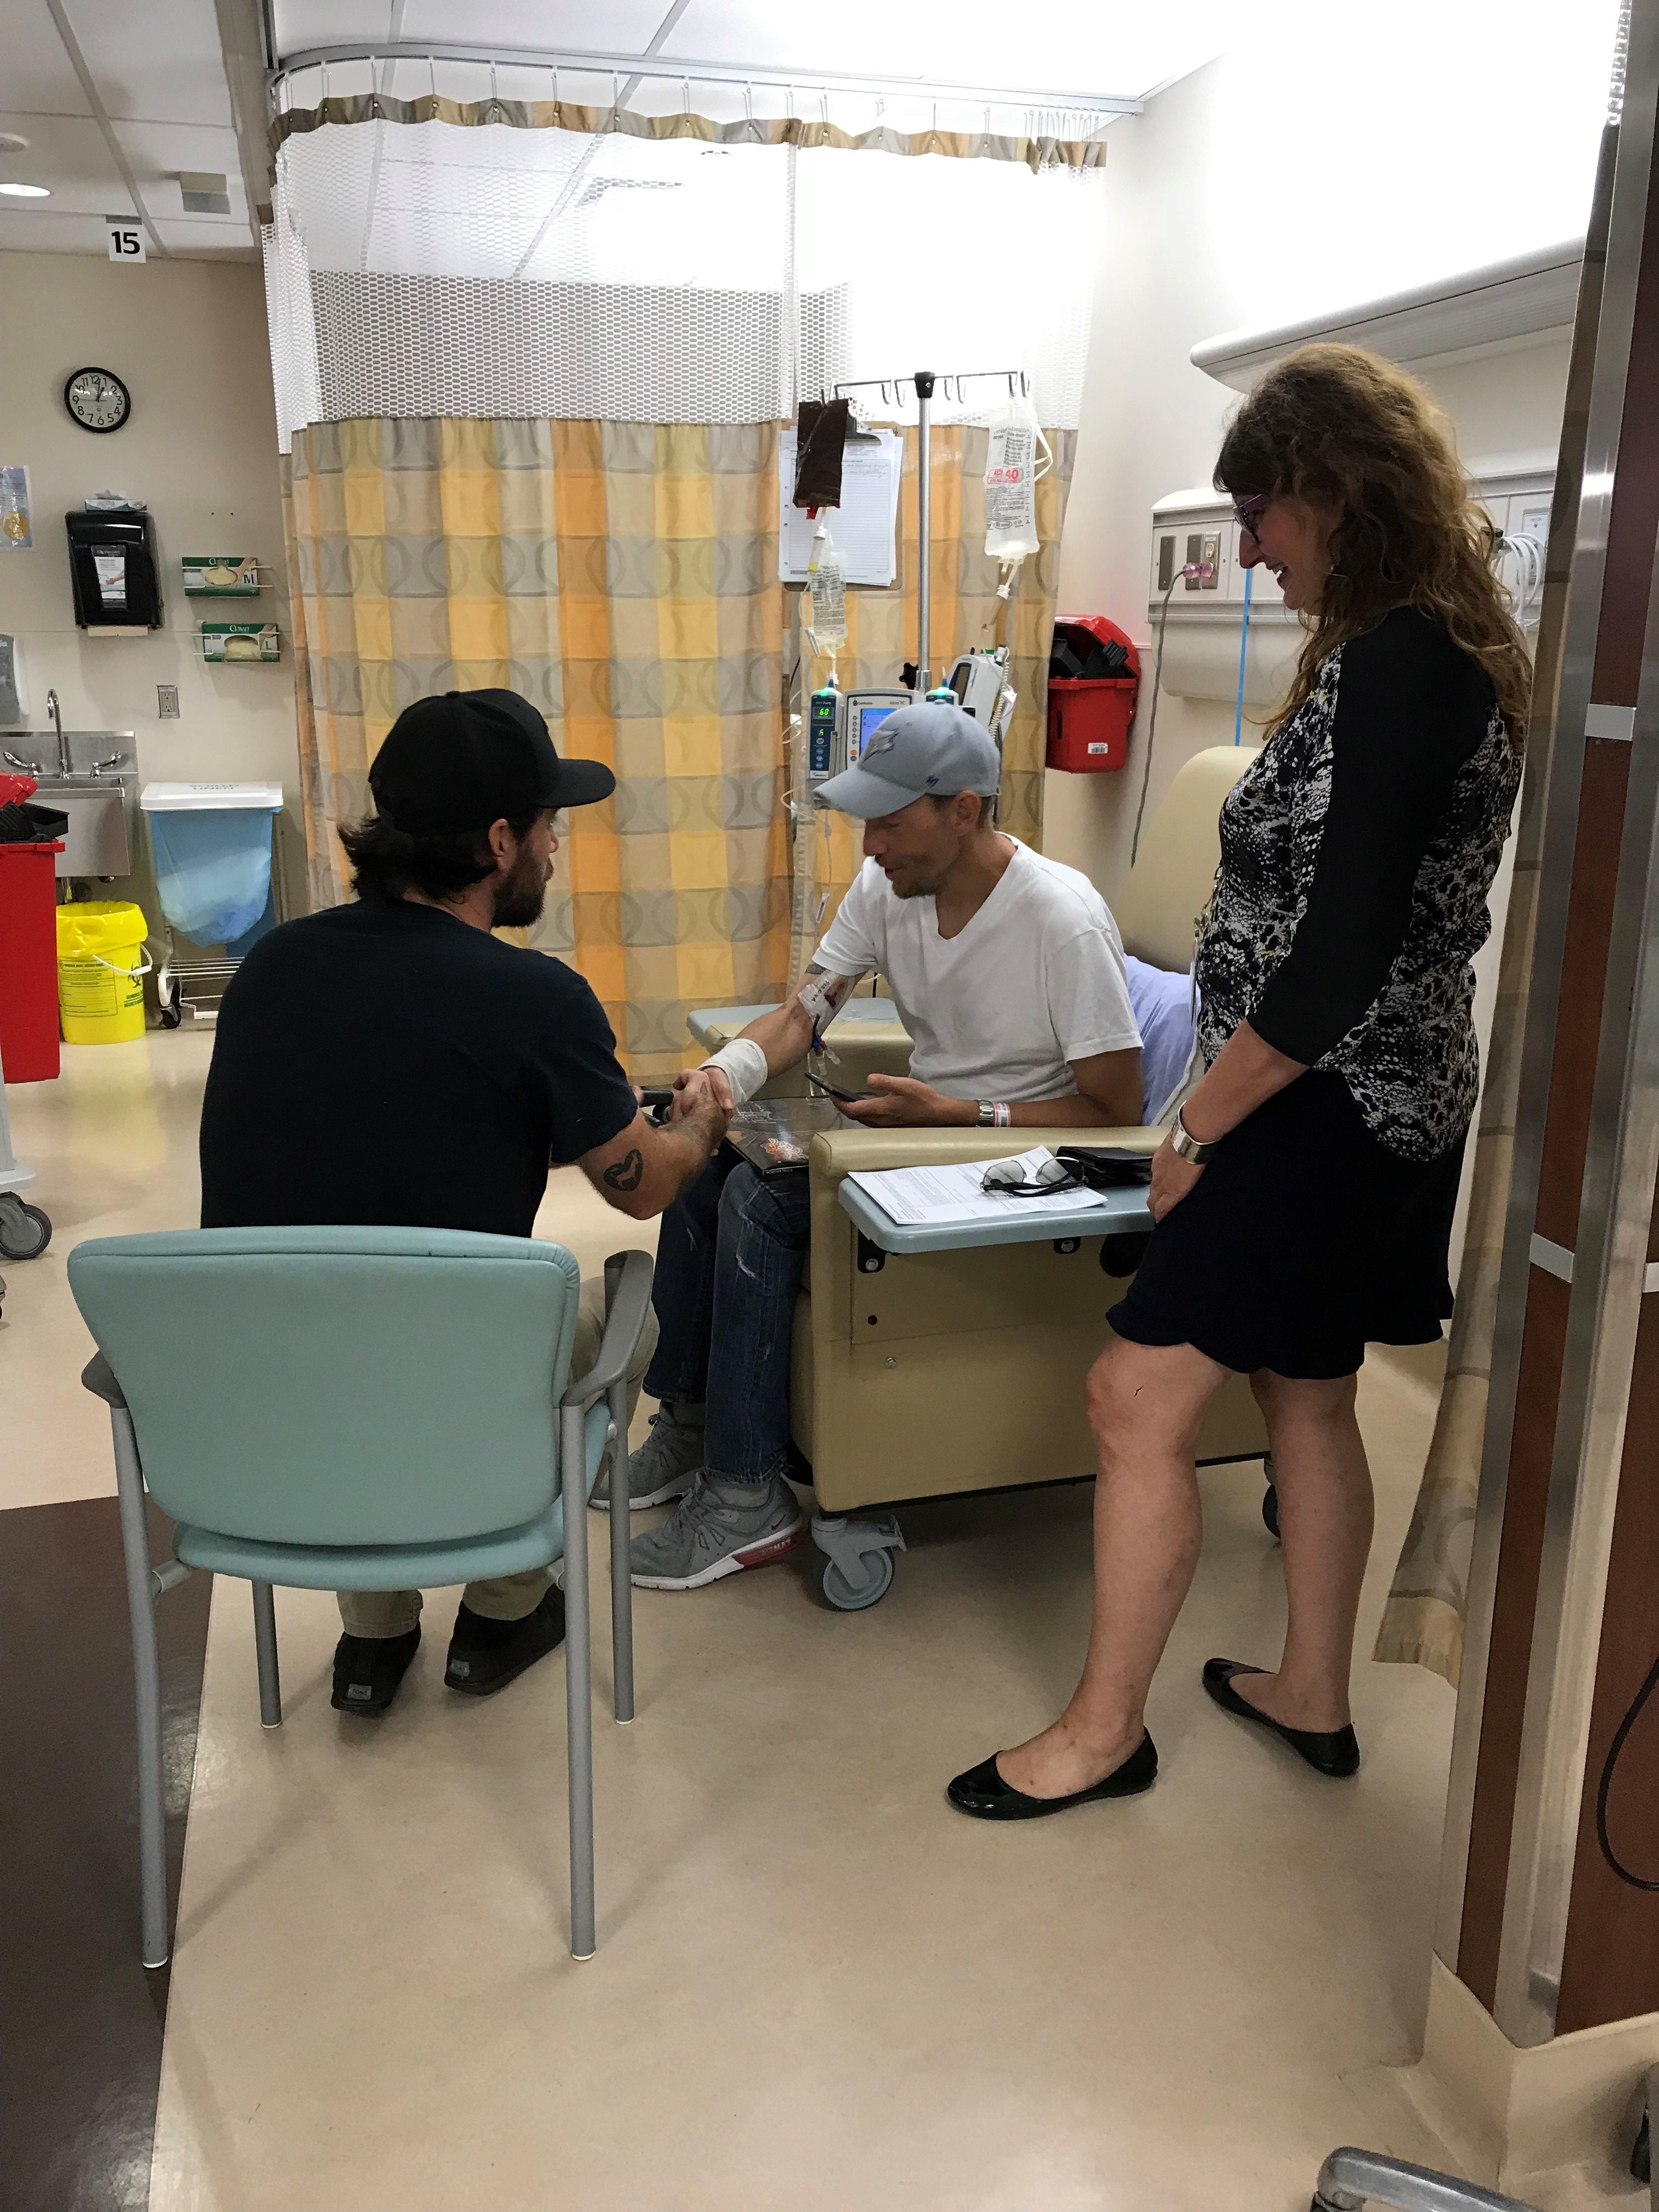 Steve Kiely sits in a hospital room talking to Darrell